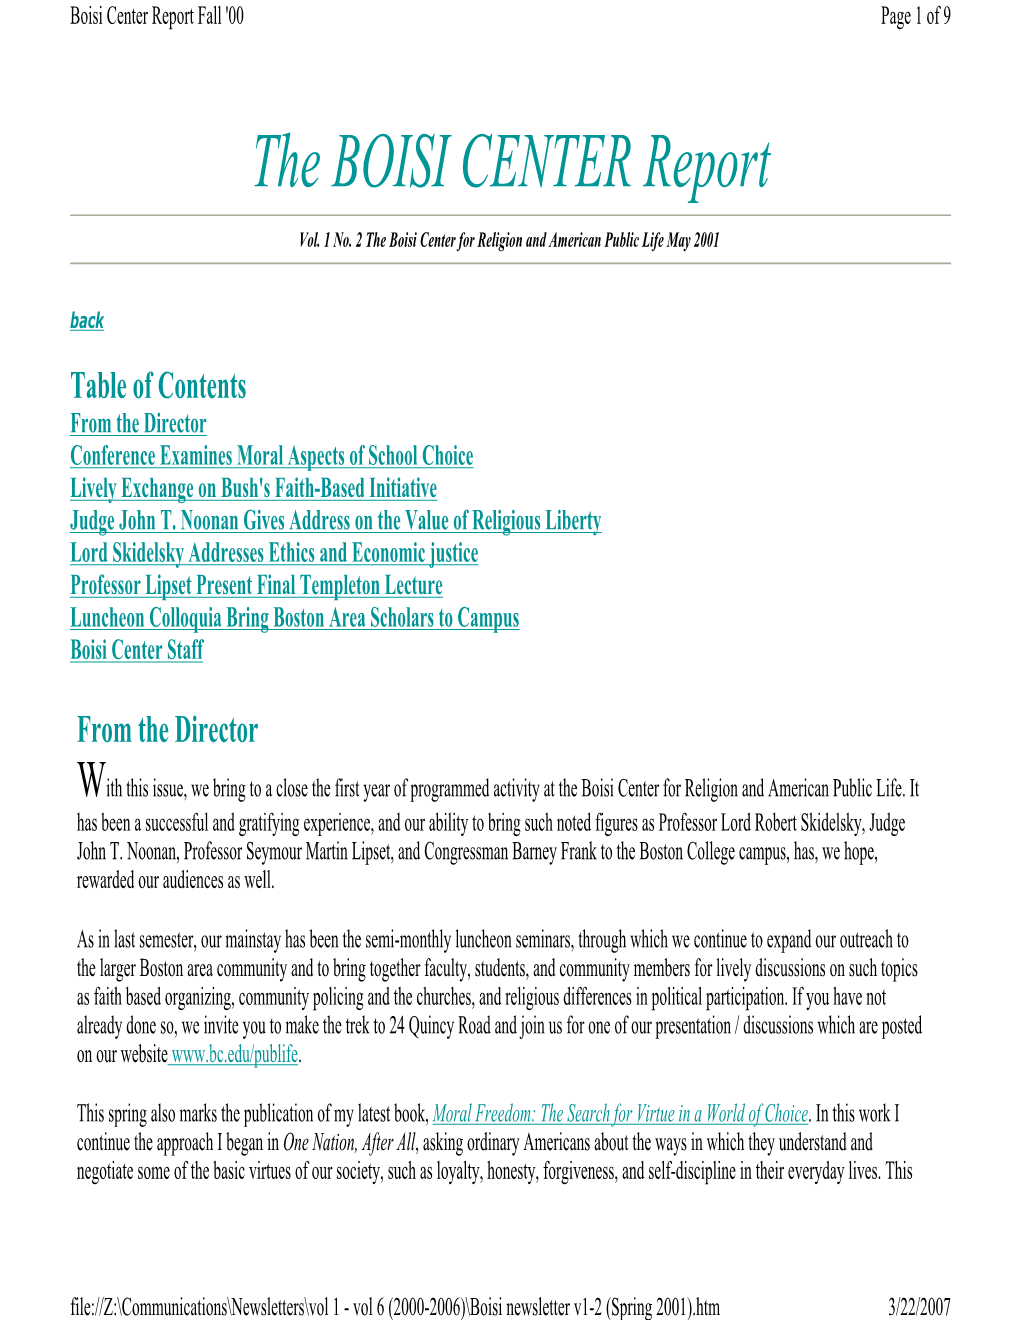 The BOISI CENTER Report